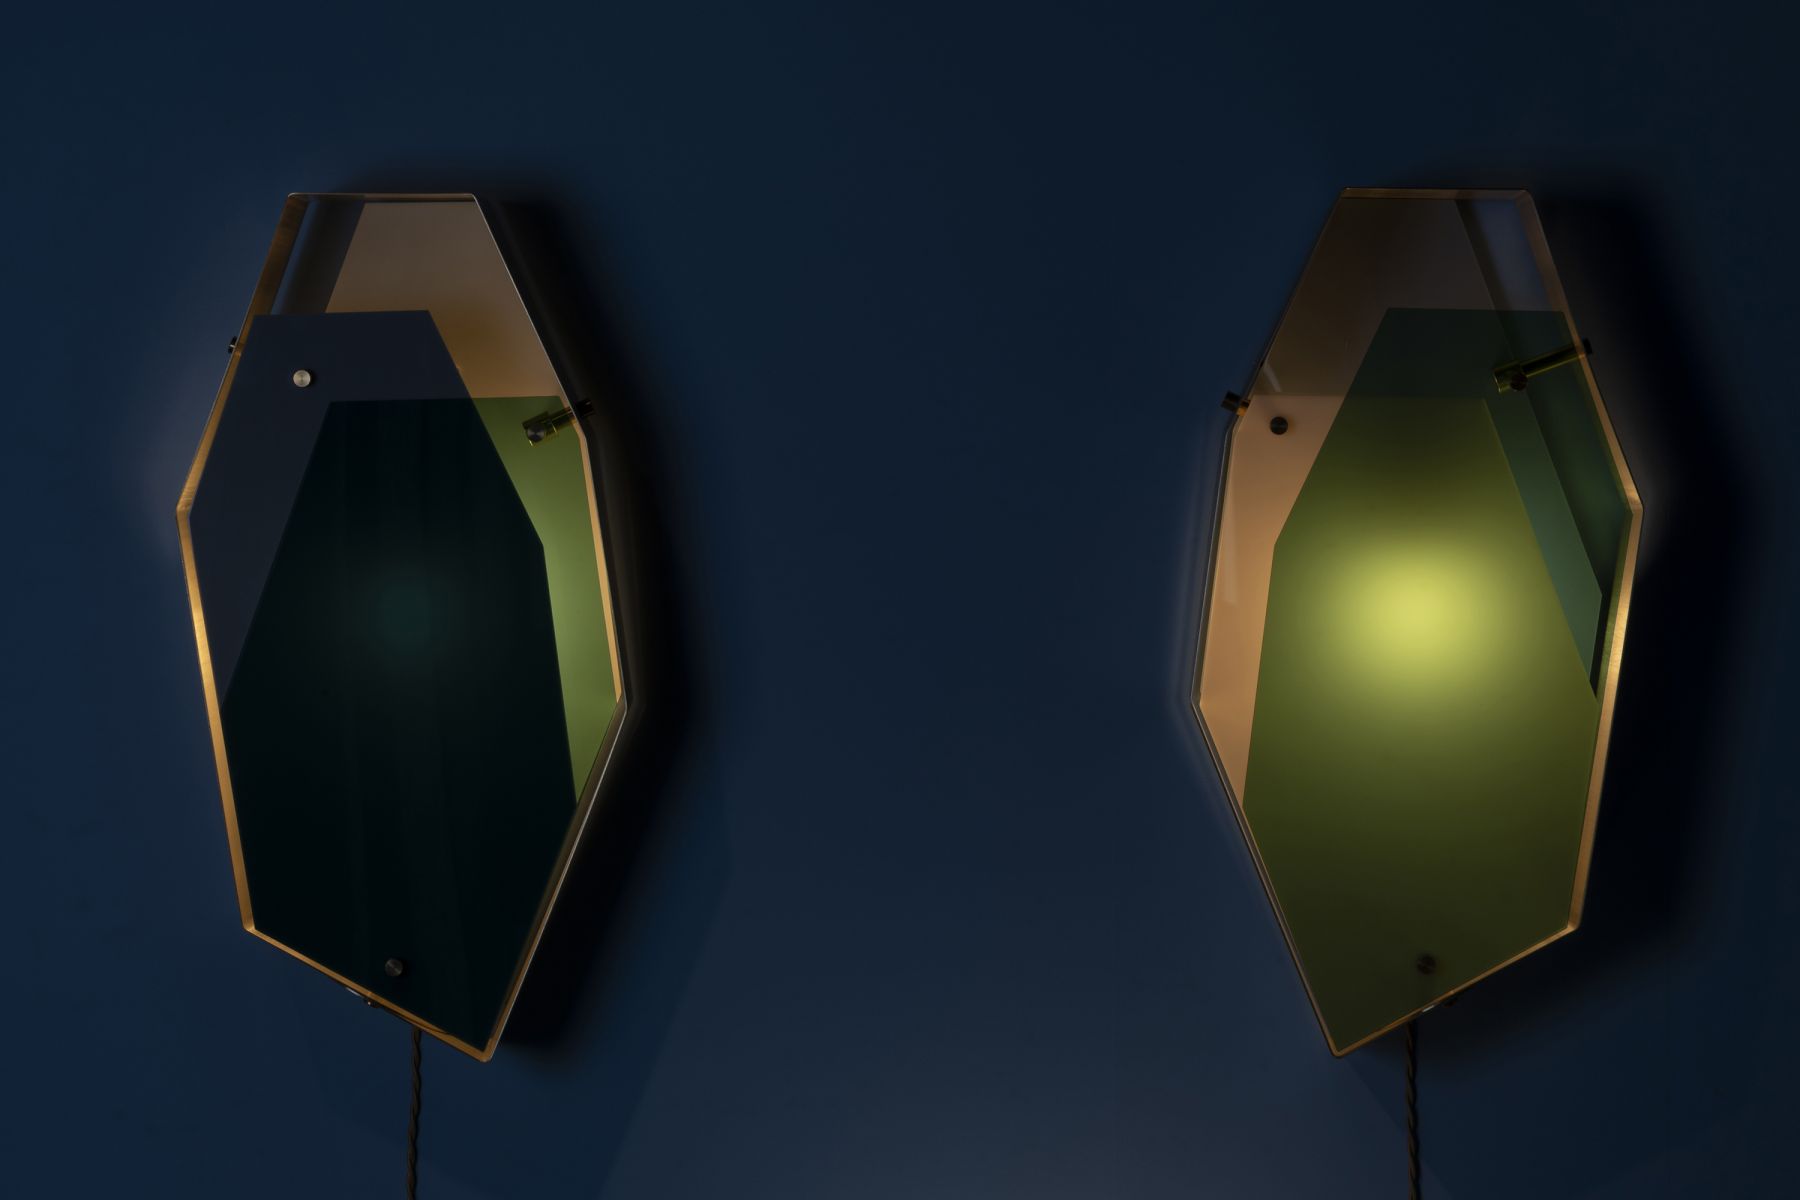 Two PIERO wall lamps Vibeke Fonnesberg-Schmidt pic-4